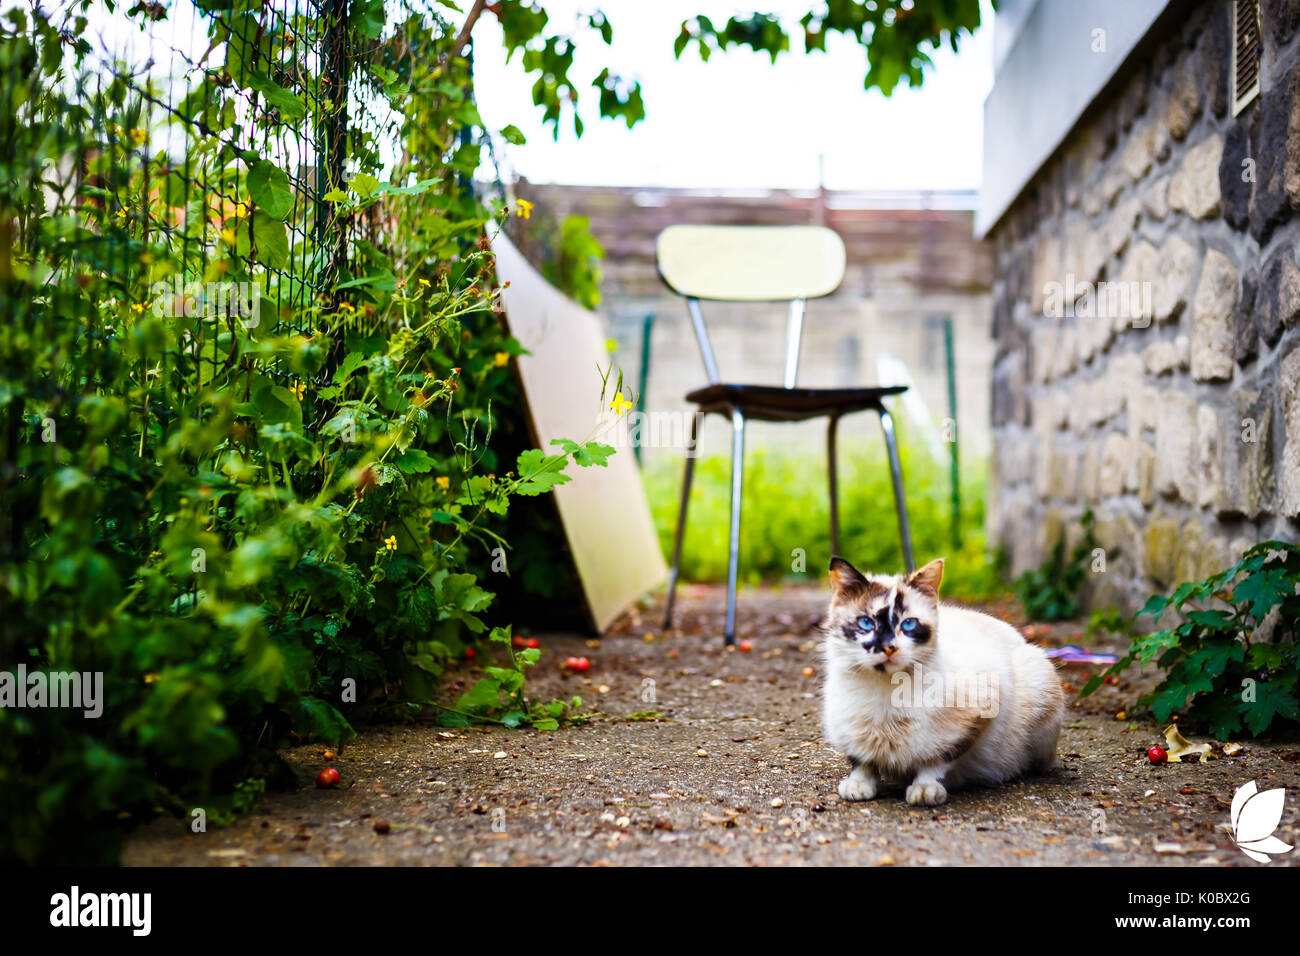 Katze-Portrait Stockfoto